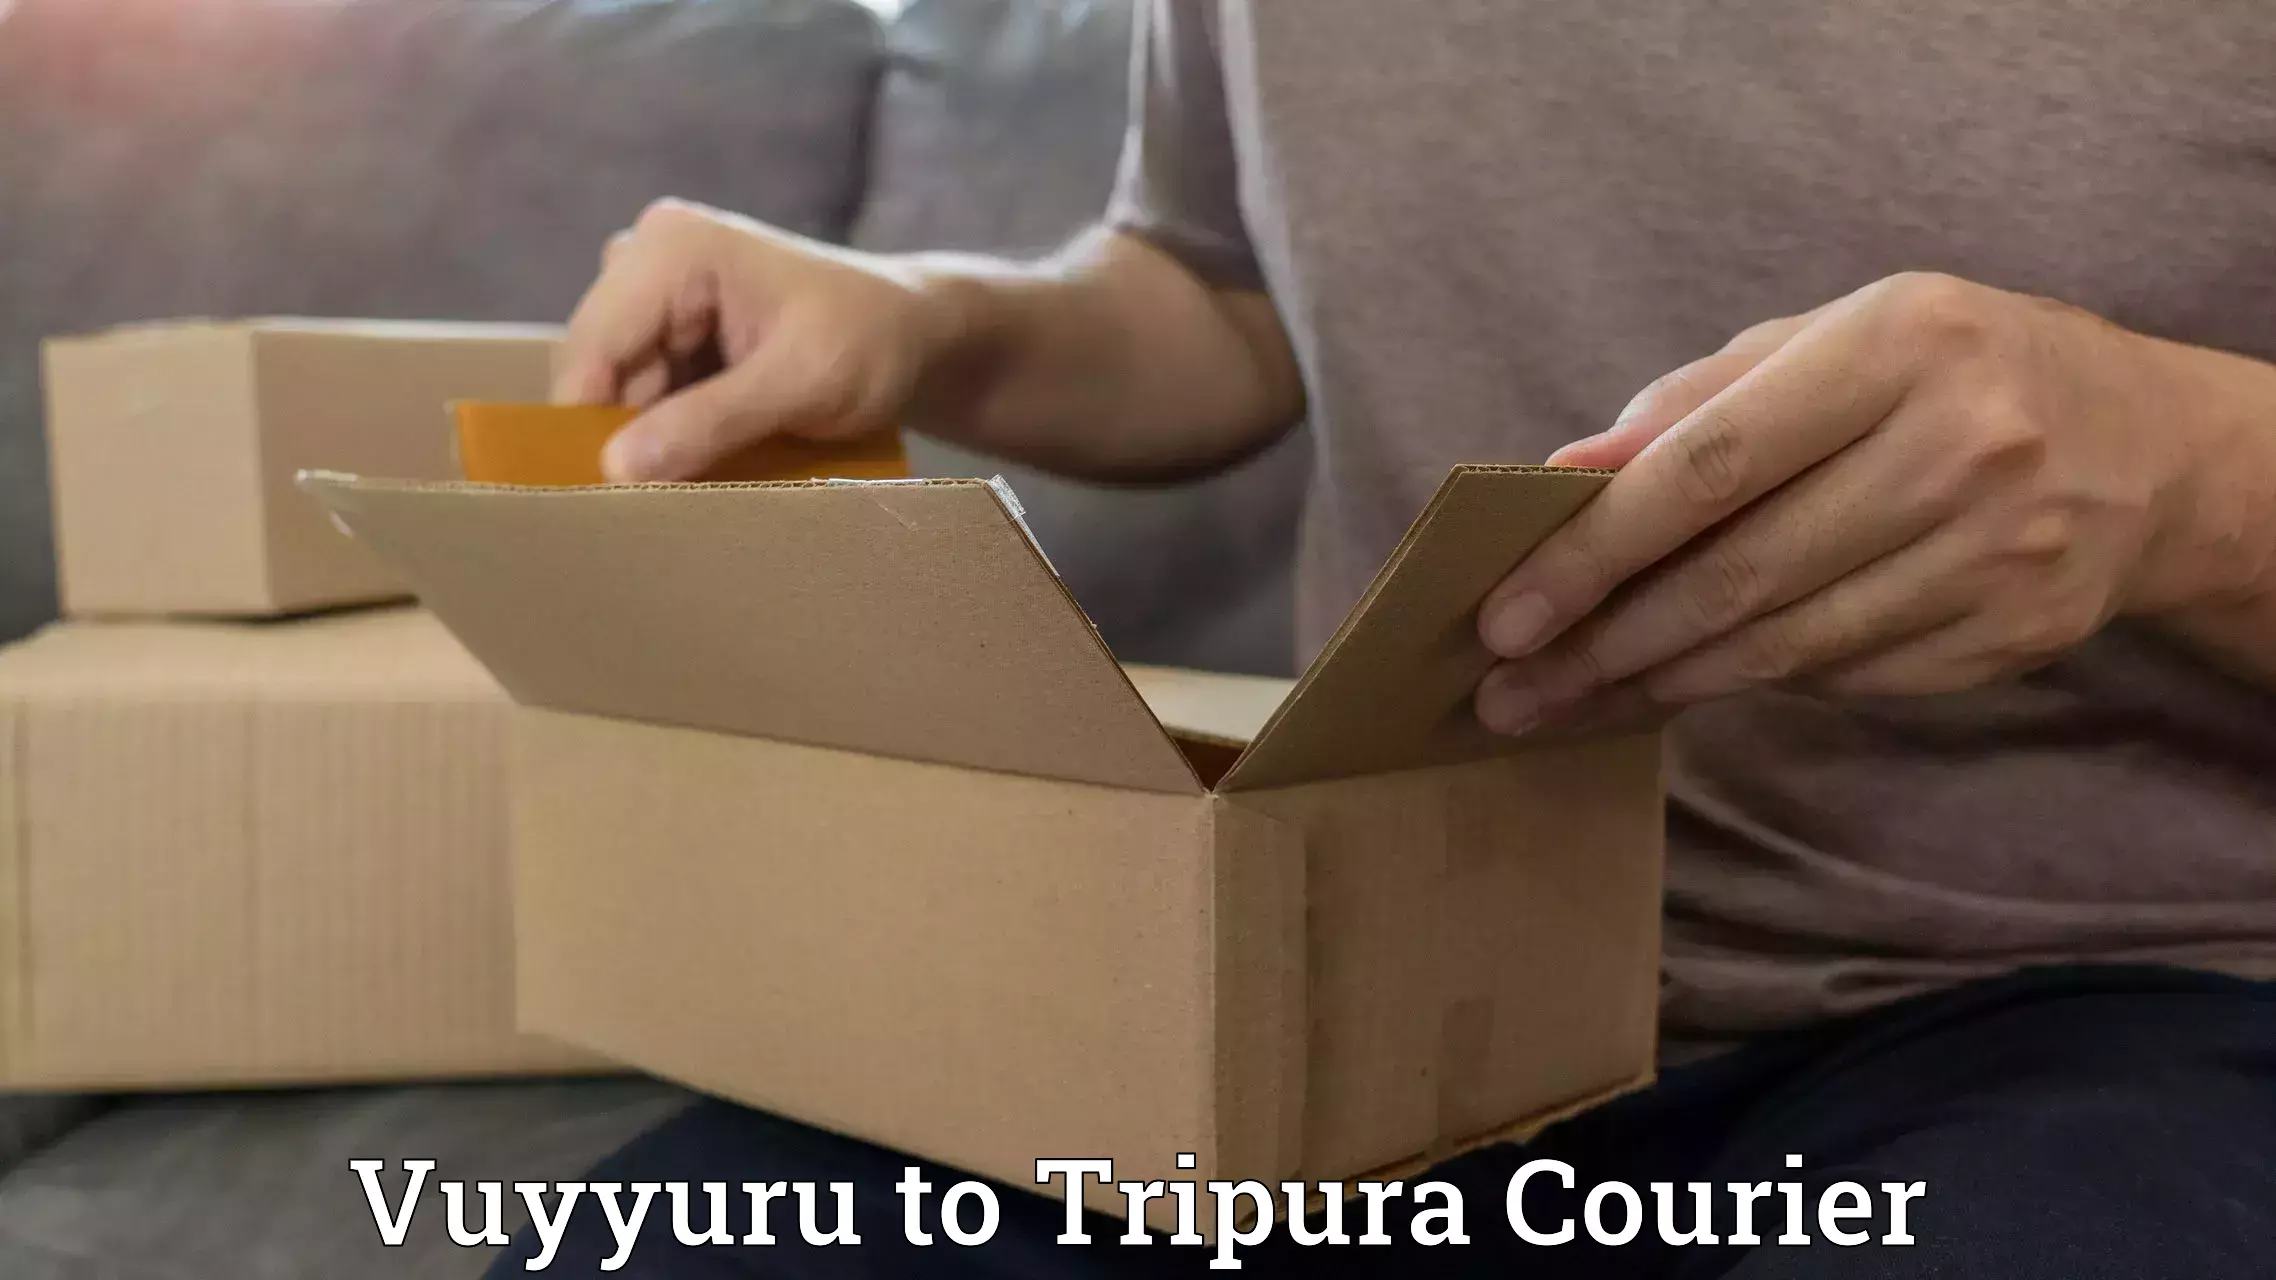 Courier service innovation in Vuyyuru to Tripura